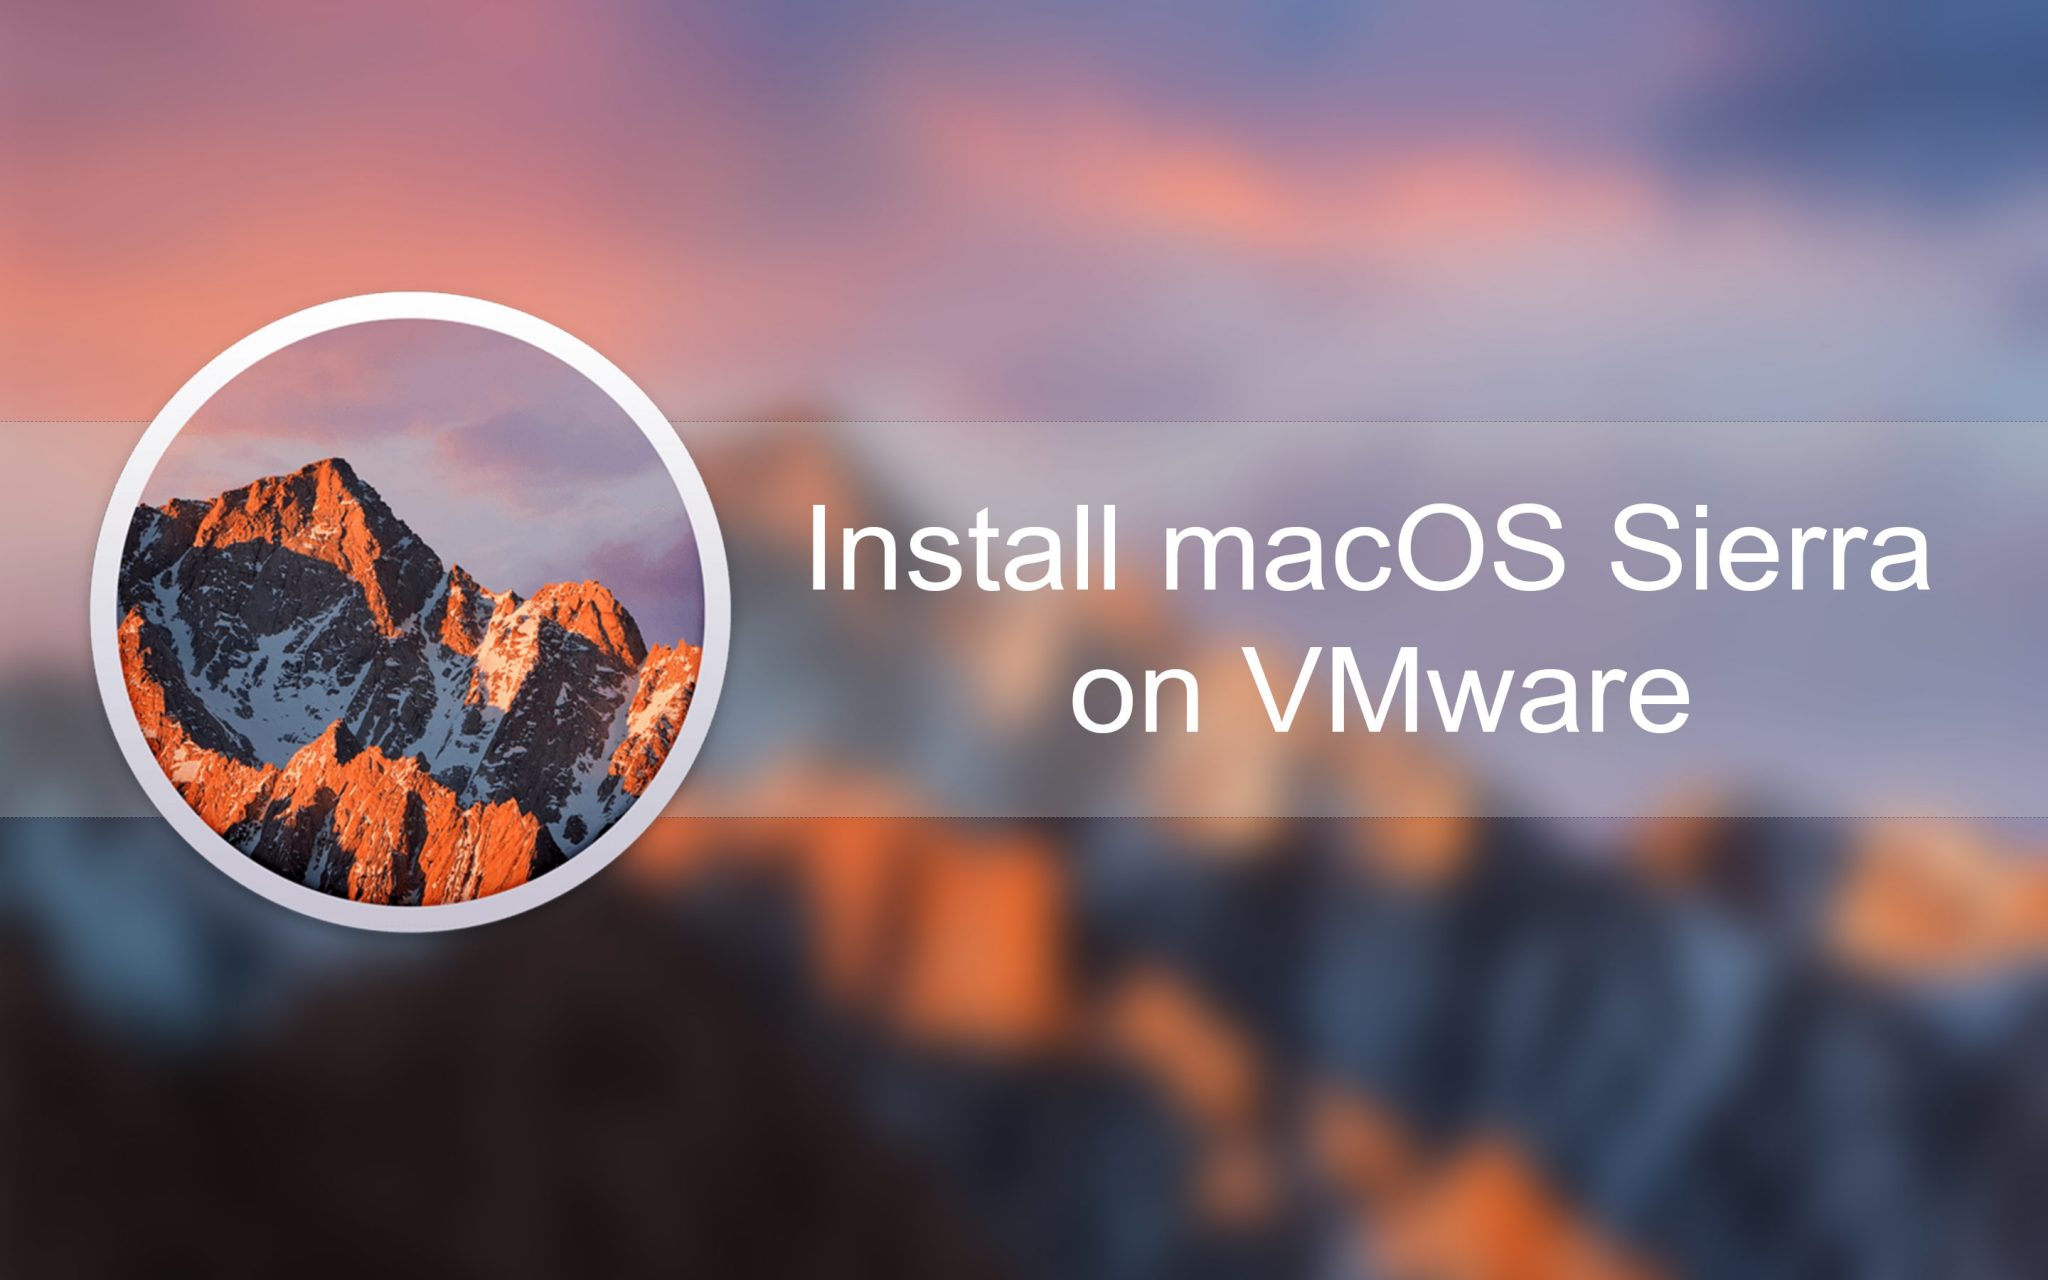 download mac osx sierra final for vmware on linux .. torrent download